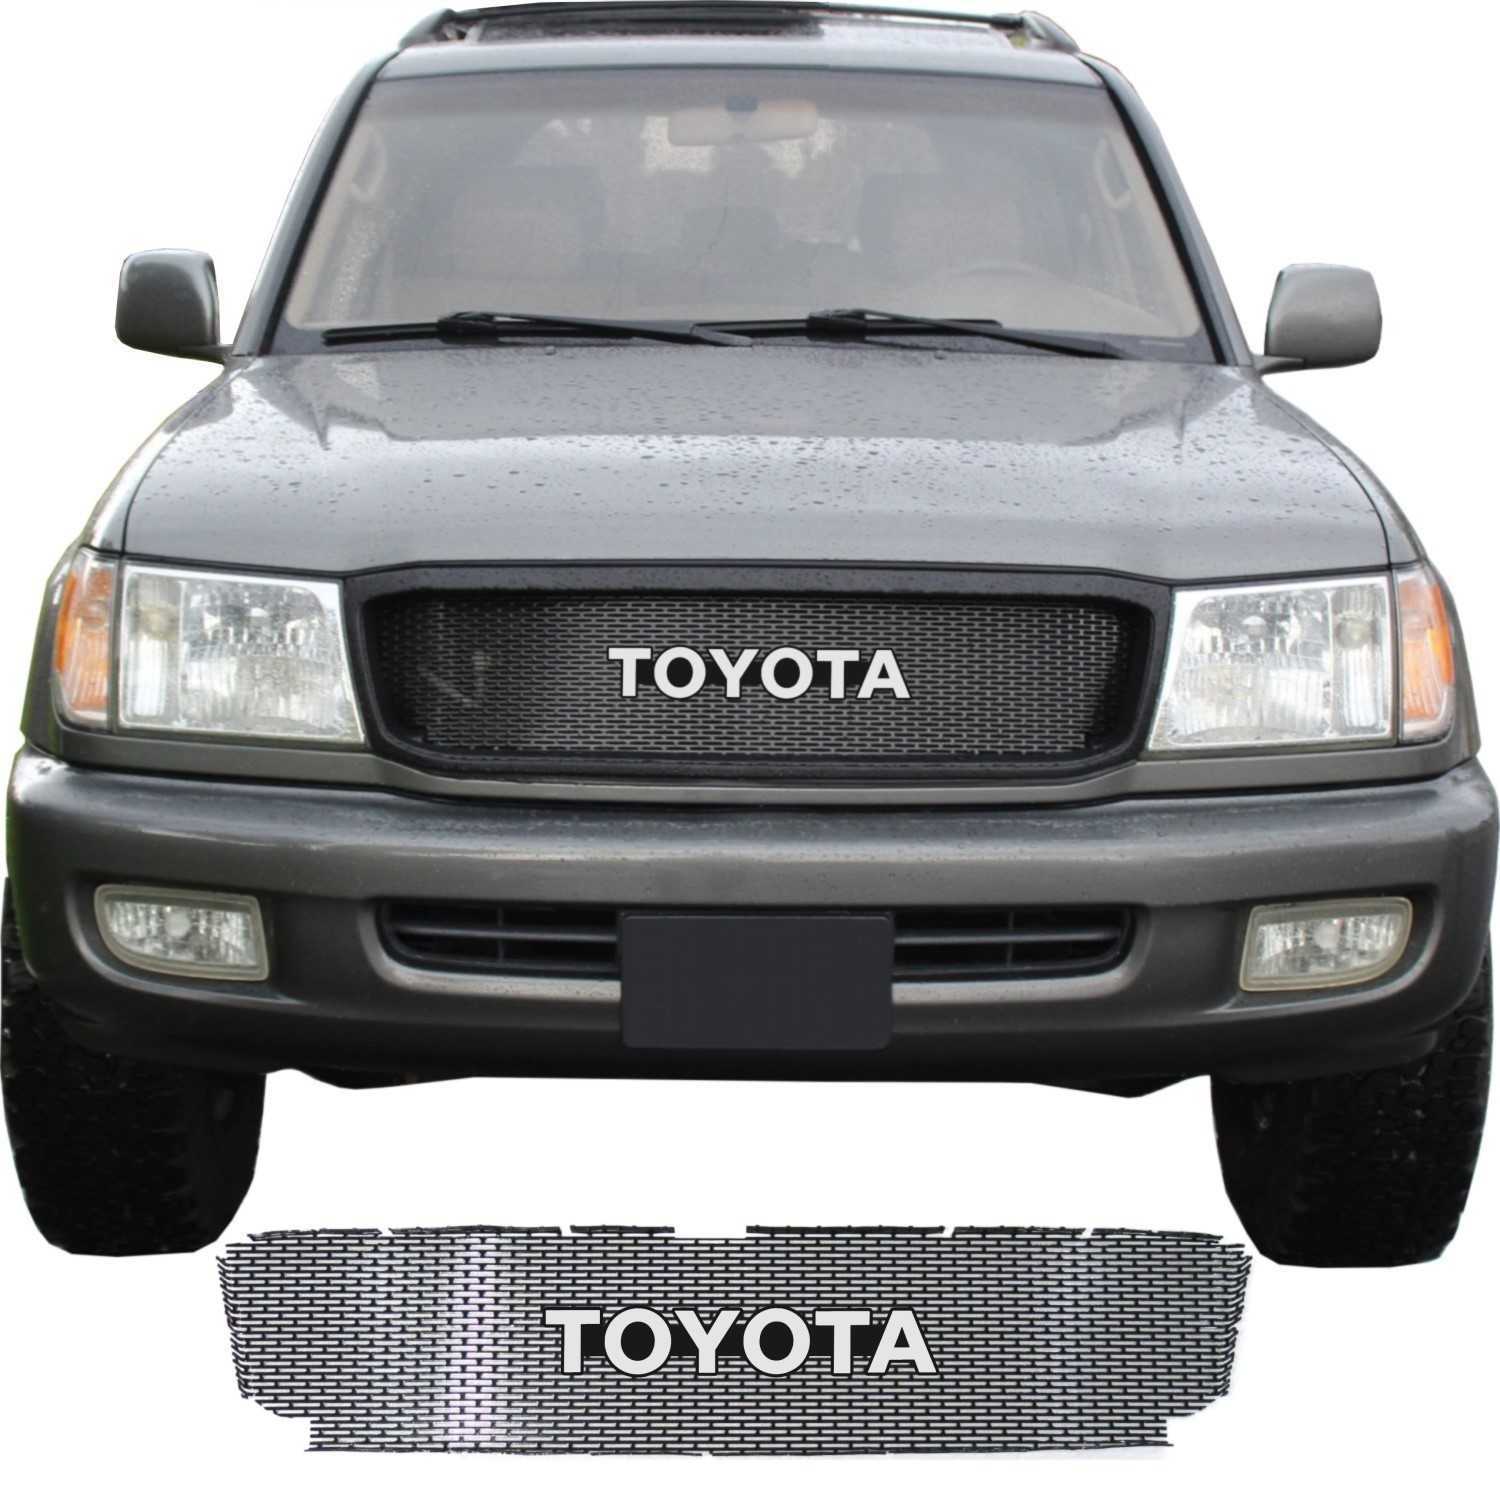 1998 - 2002 Toyota Land Cruiser Series 100 Grill Mesh and Toyota Emblem